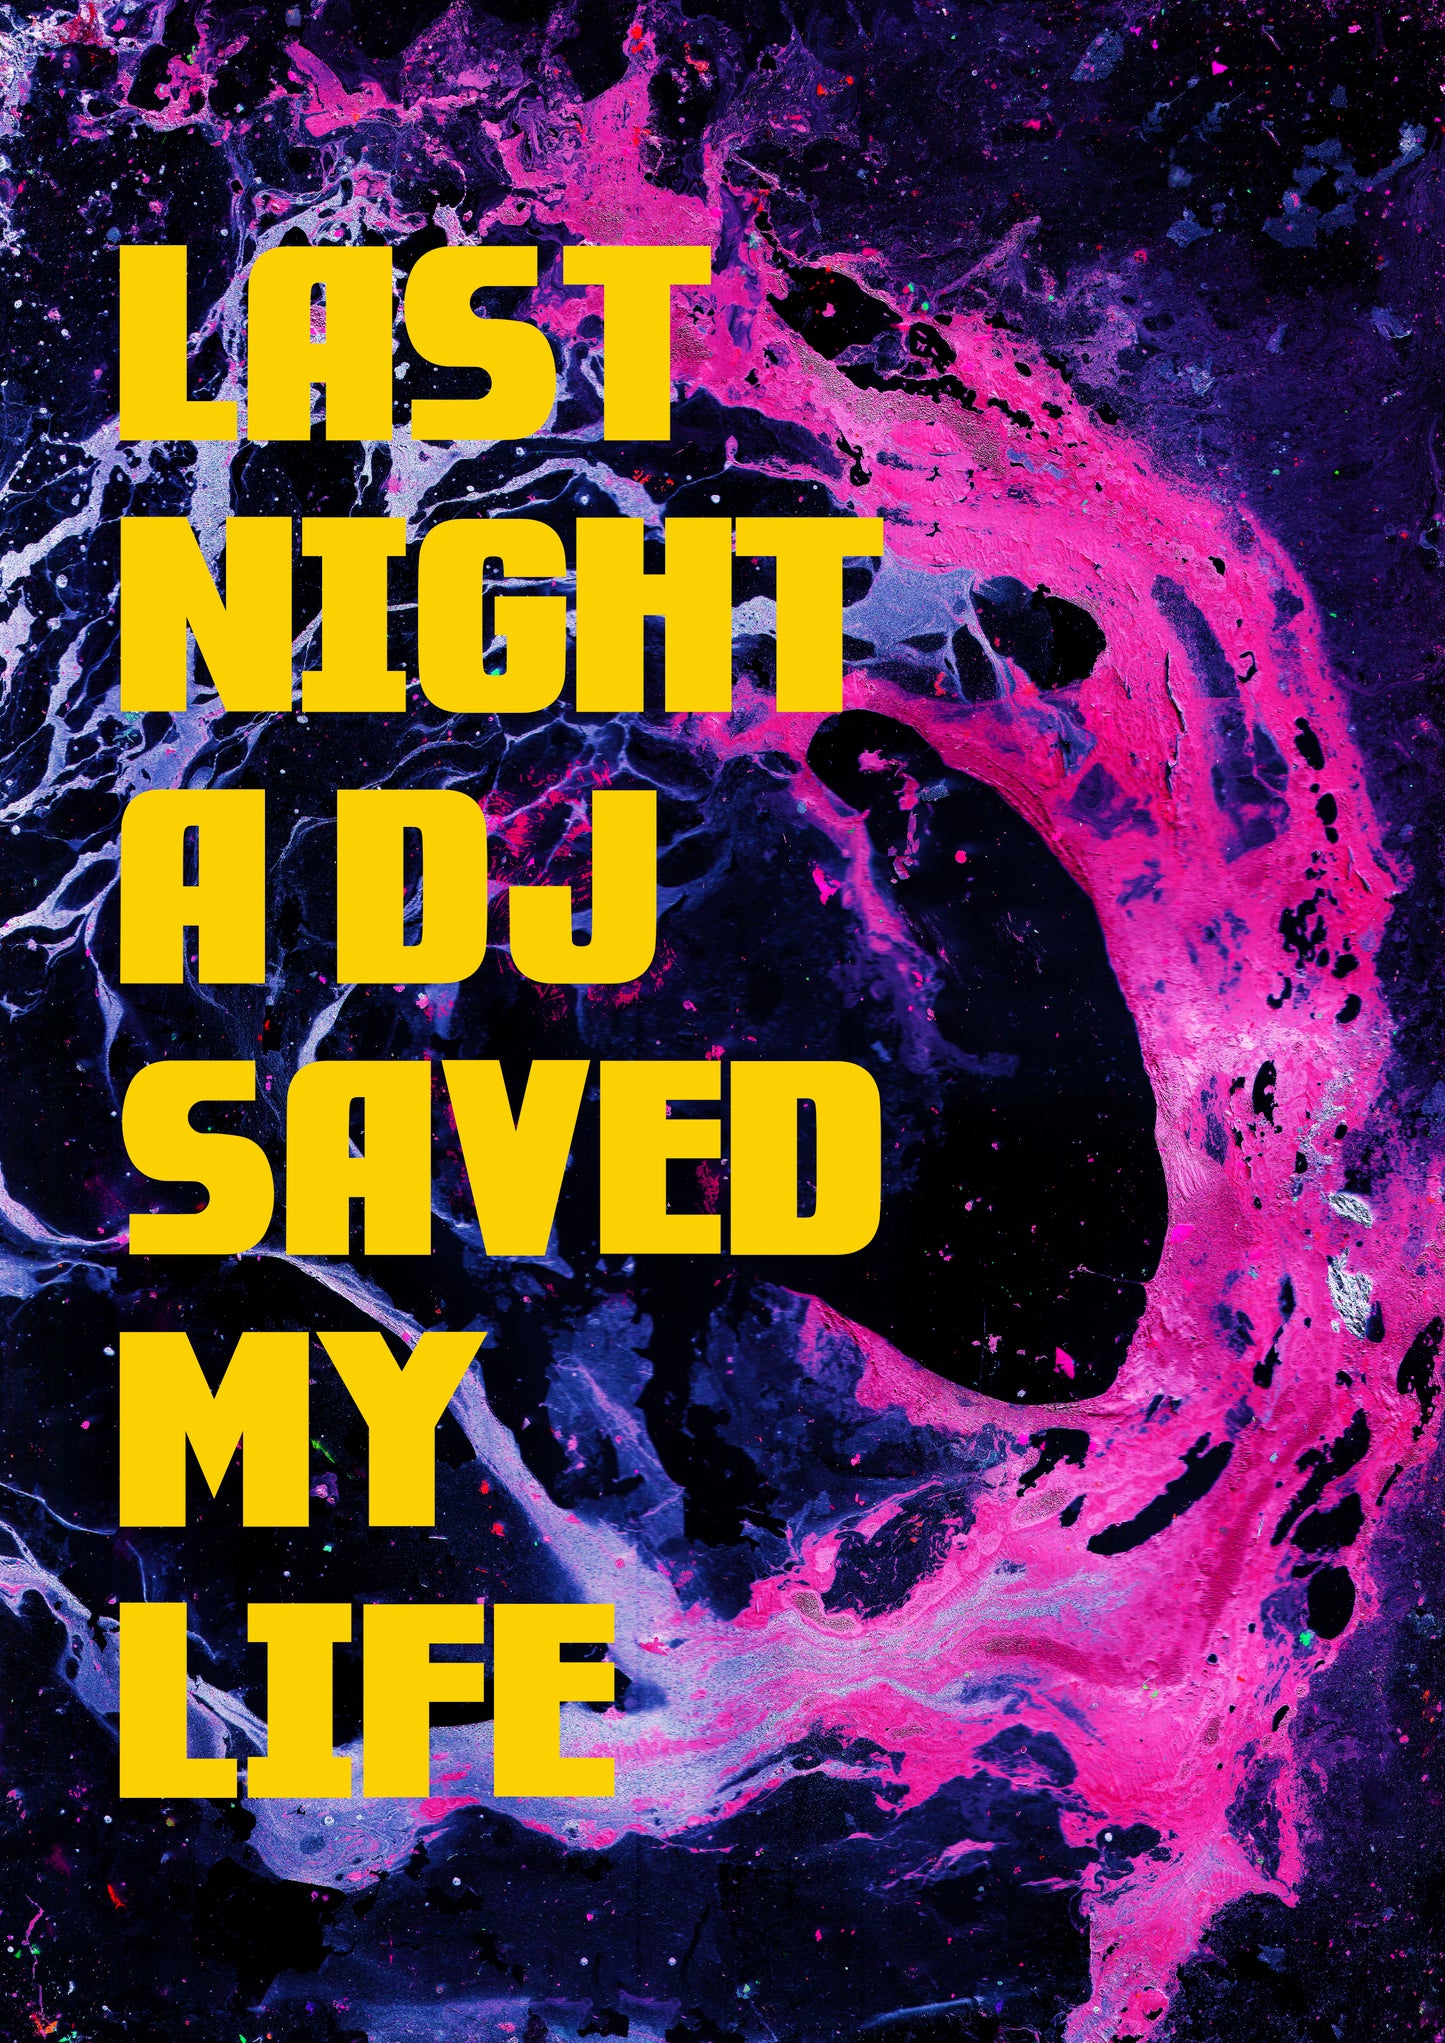 LAST NIGHT A DJ SAVED MY LIFE